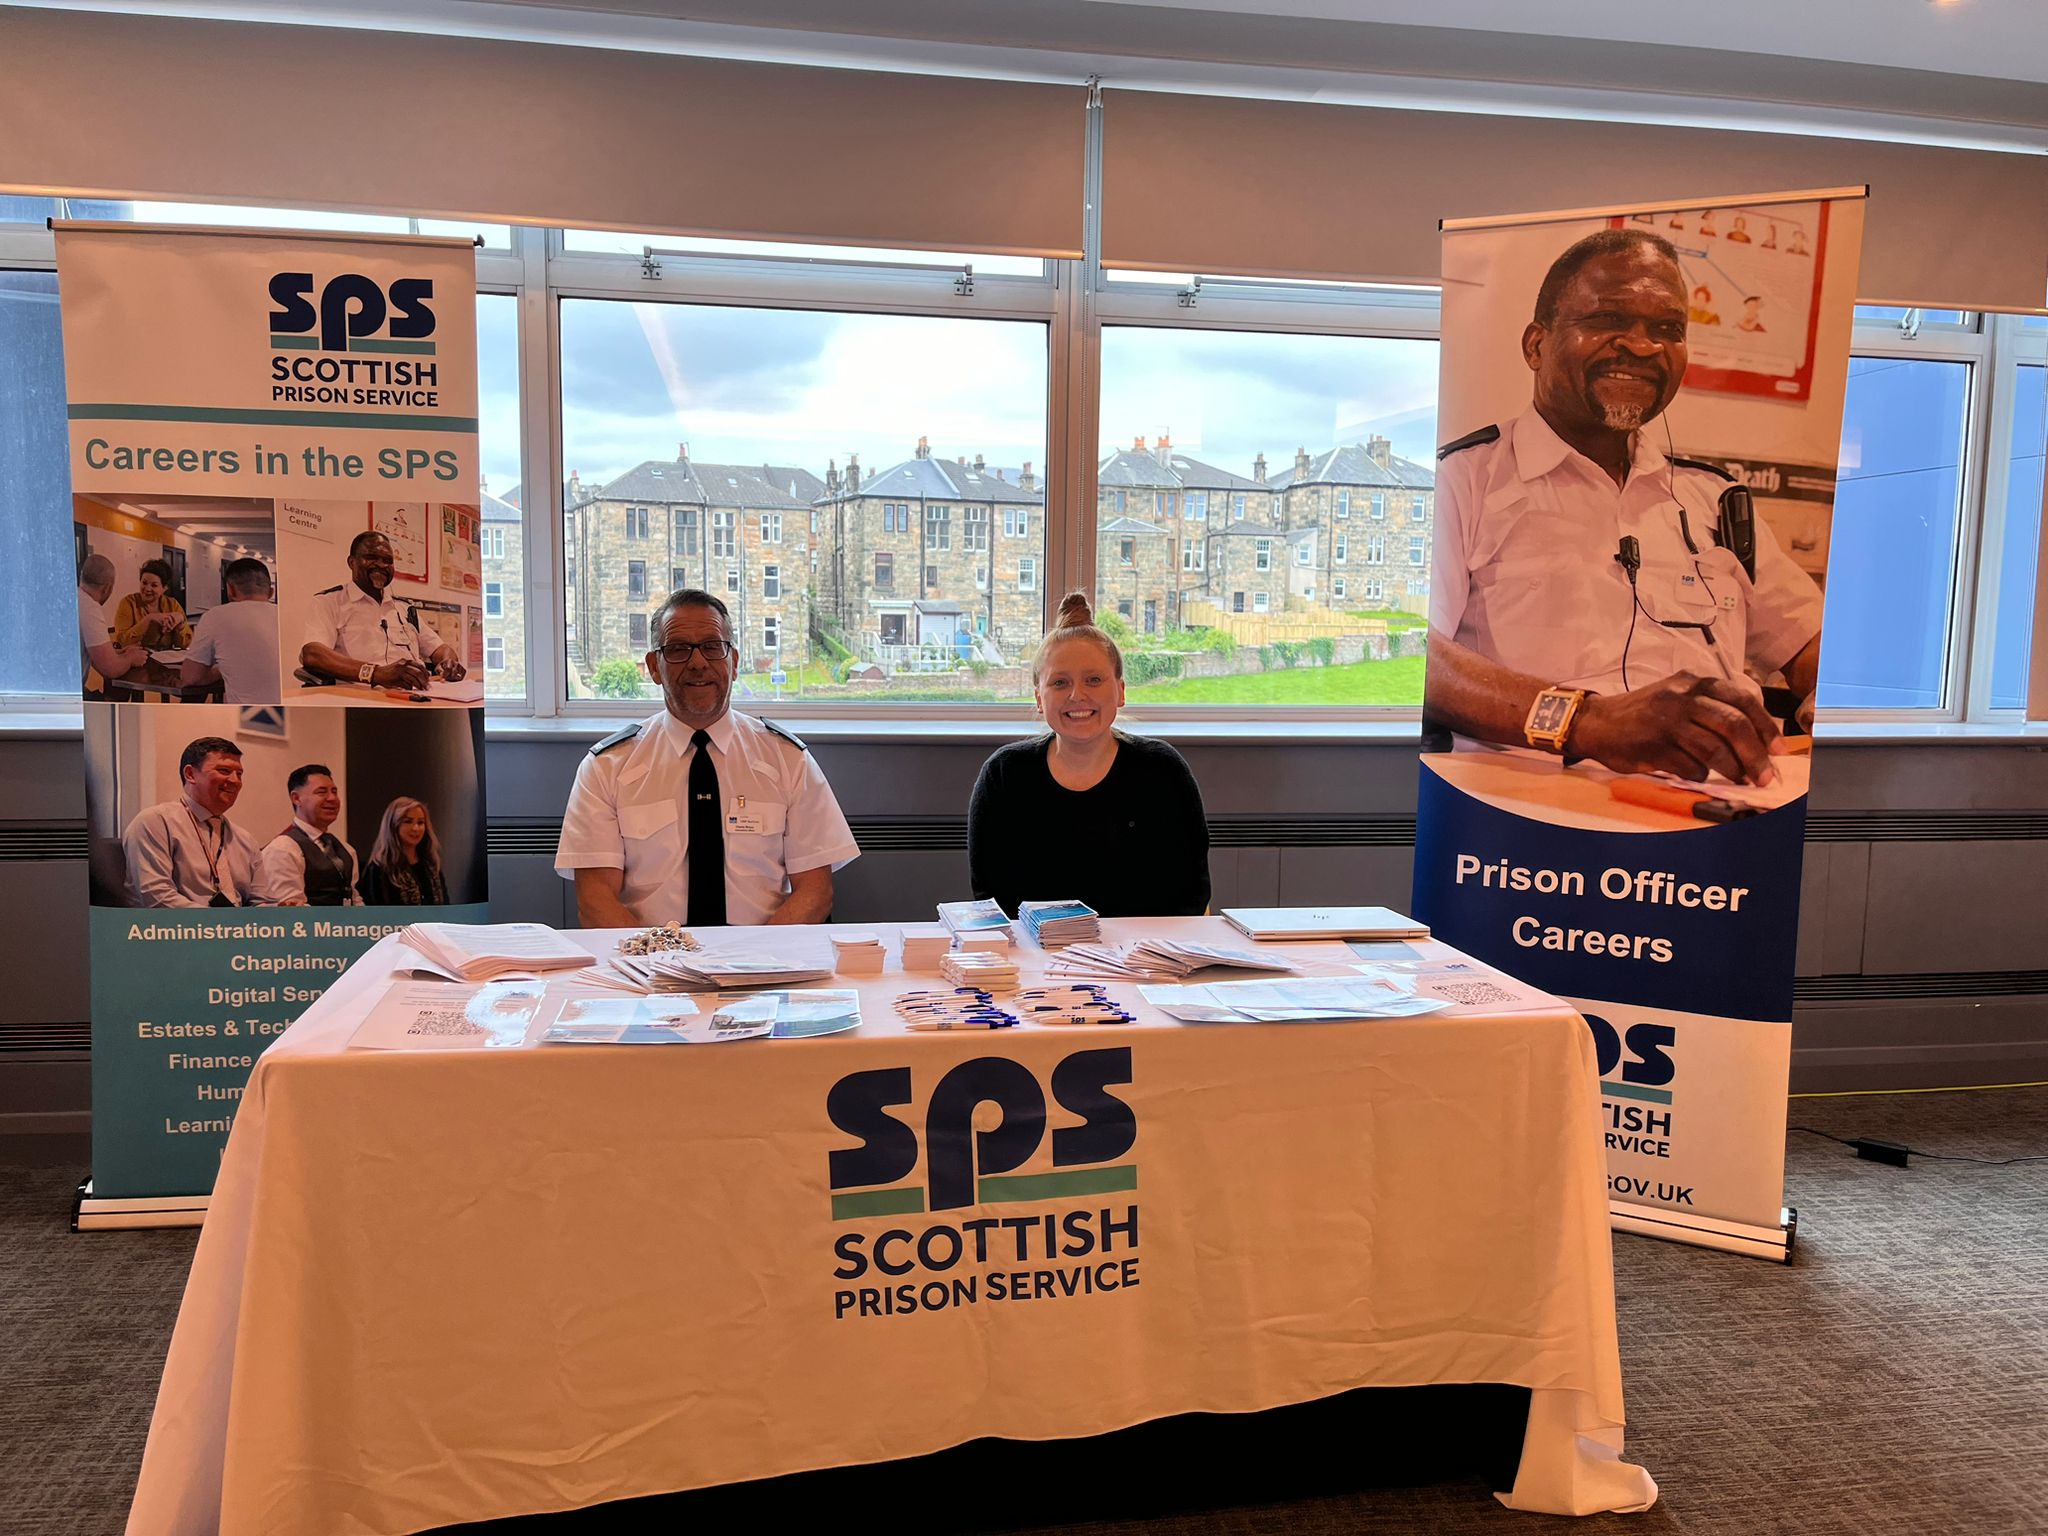 Scottish Prison Service at our event in Glasgow